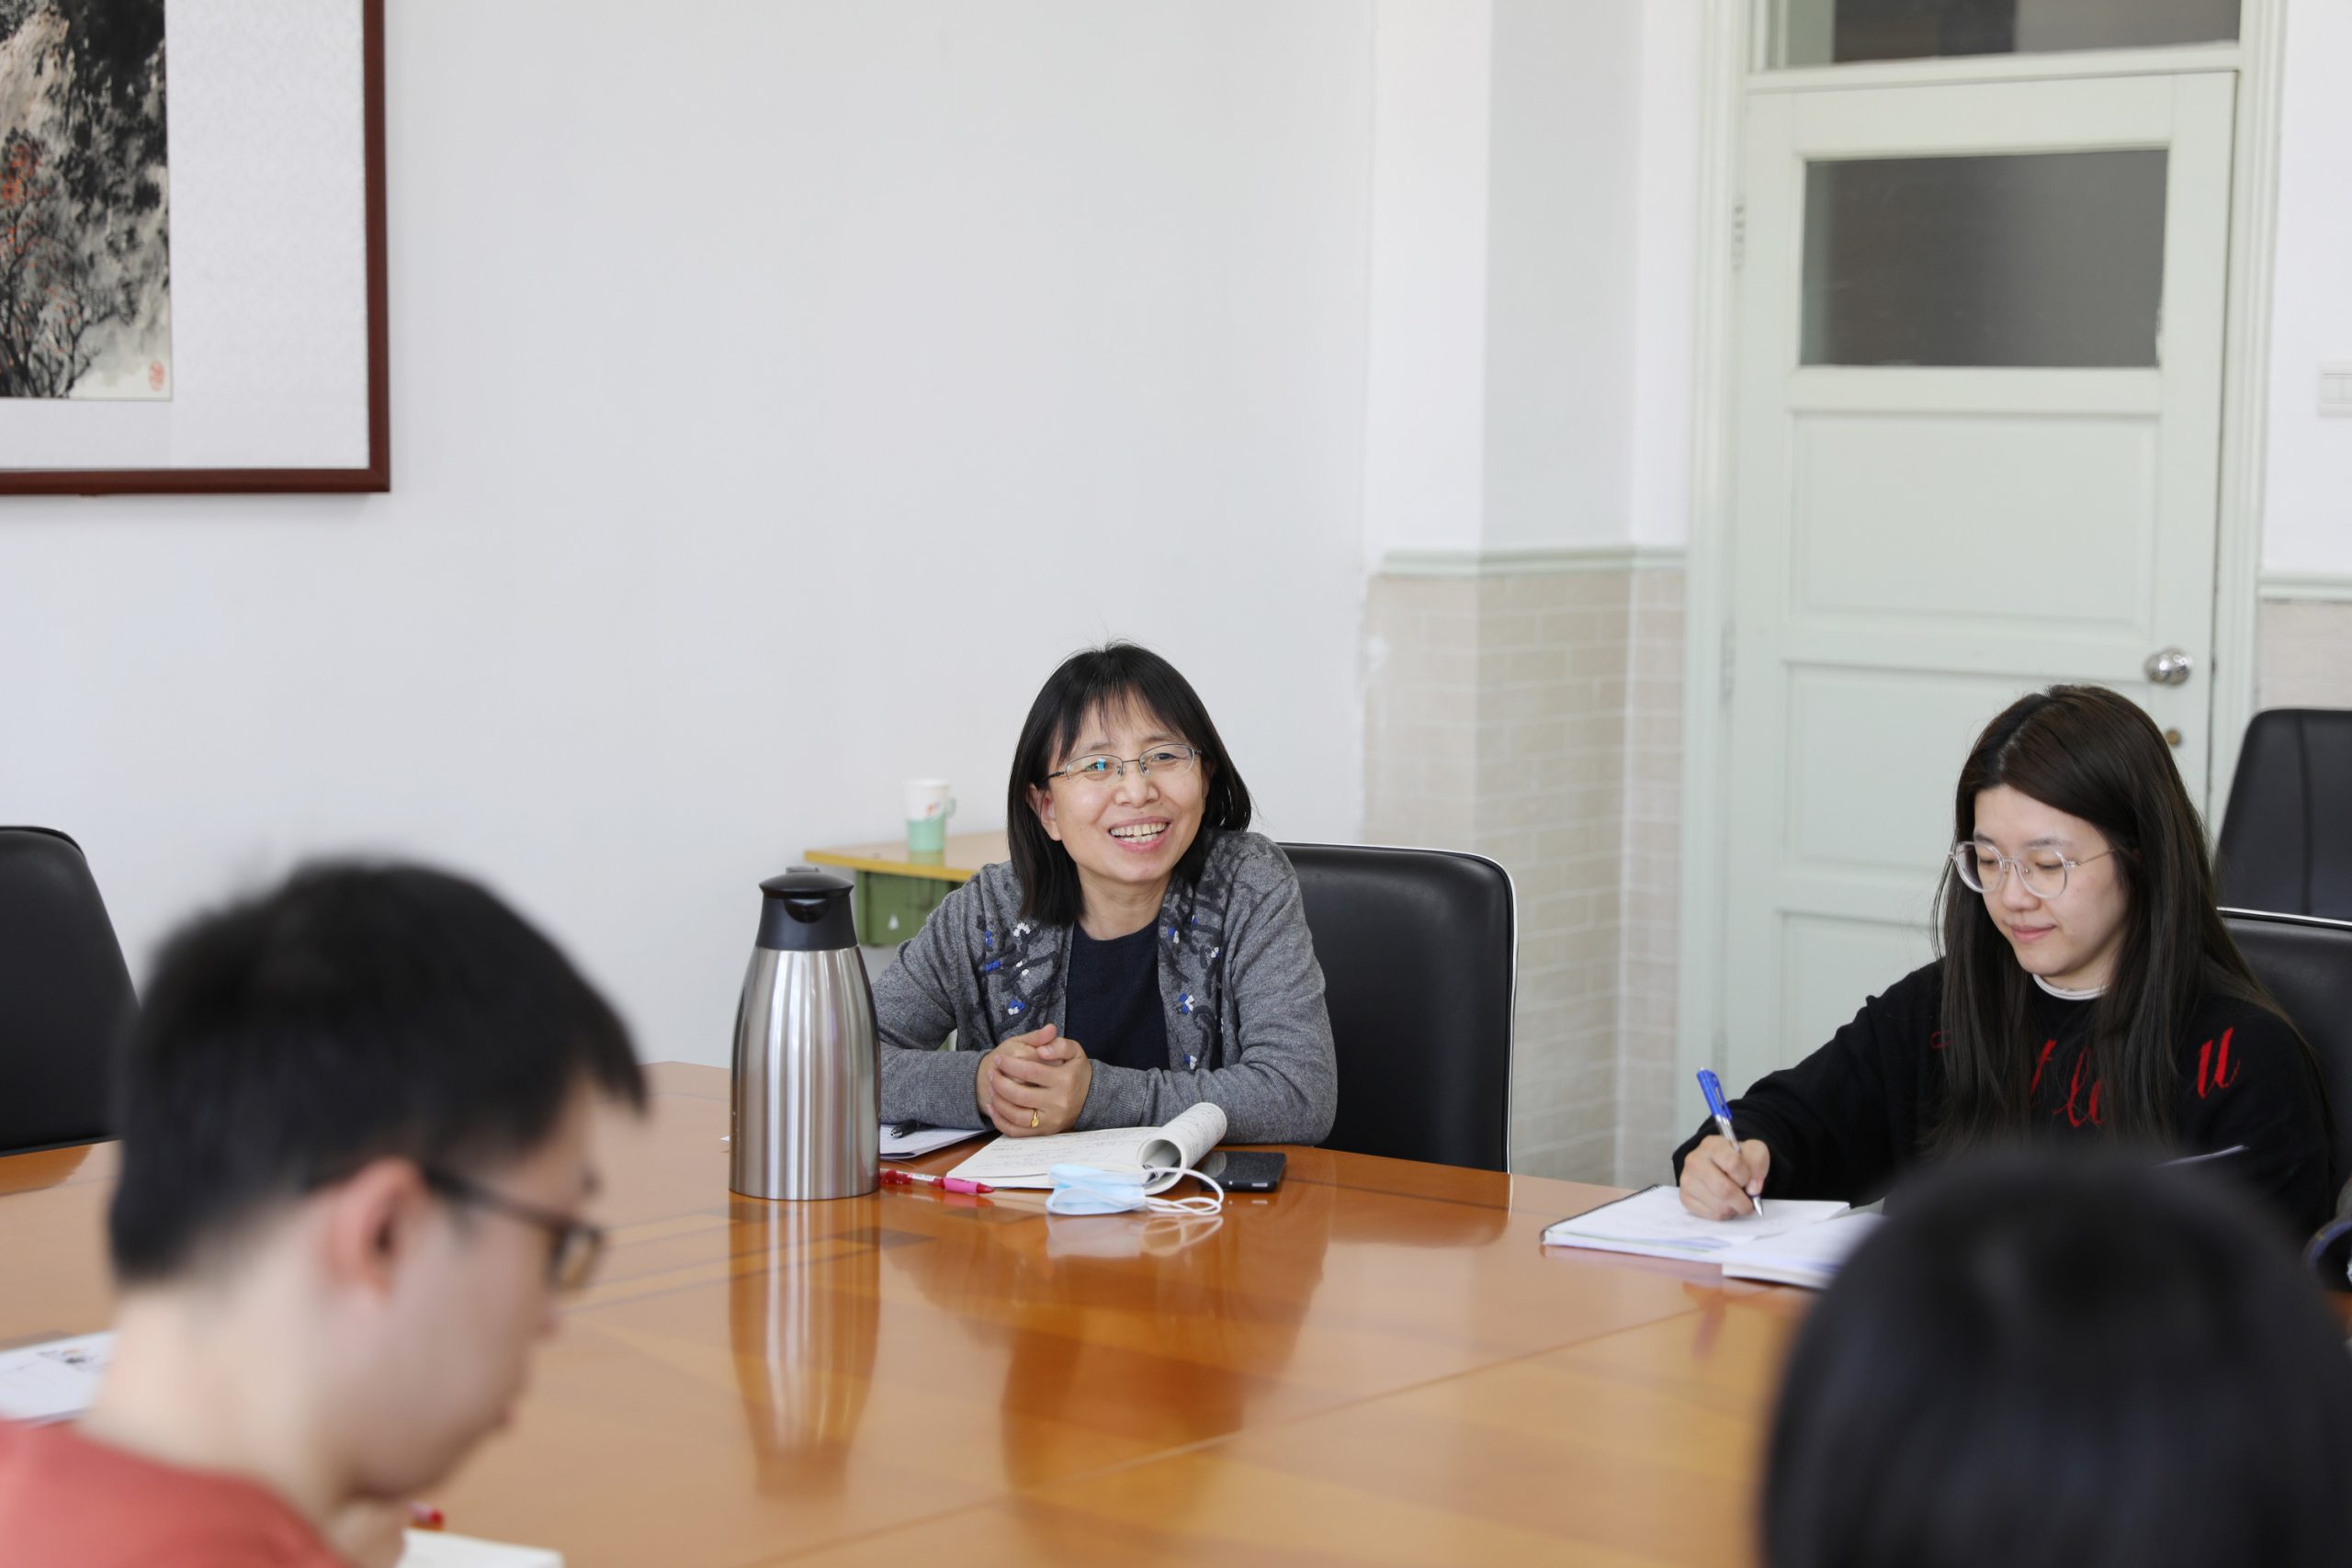 北京师范大学第二附属中学社会性科学议题学习项目合作研讨会顺利举行（2023-02-22）<br>The Successful Closure of the SSI-L Project Seminar at the Second Affiliated Middle School of Beijing Normal University (02/22/2023)插图2